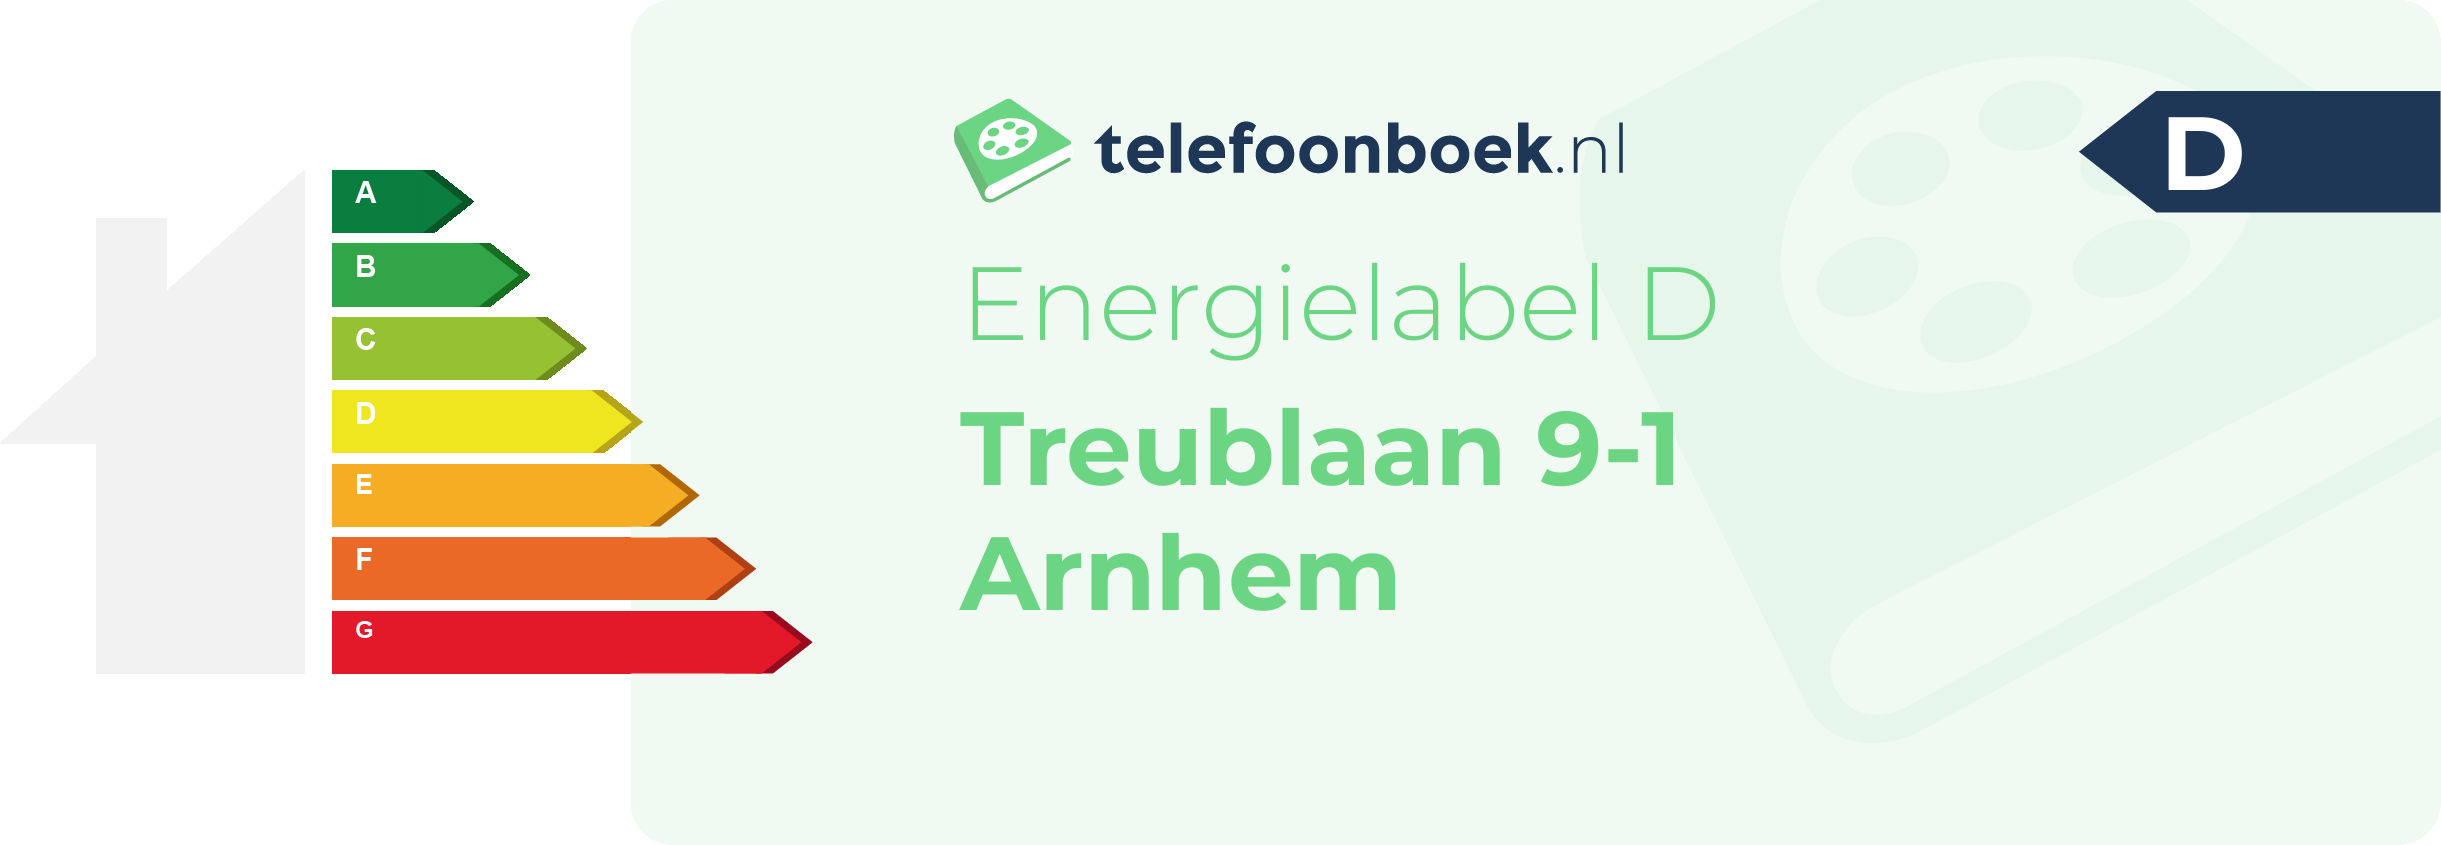 Energielabel Treublaan 9-1 Arnhem